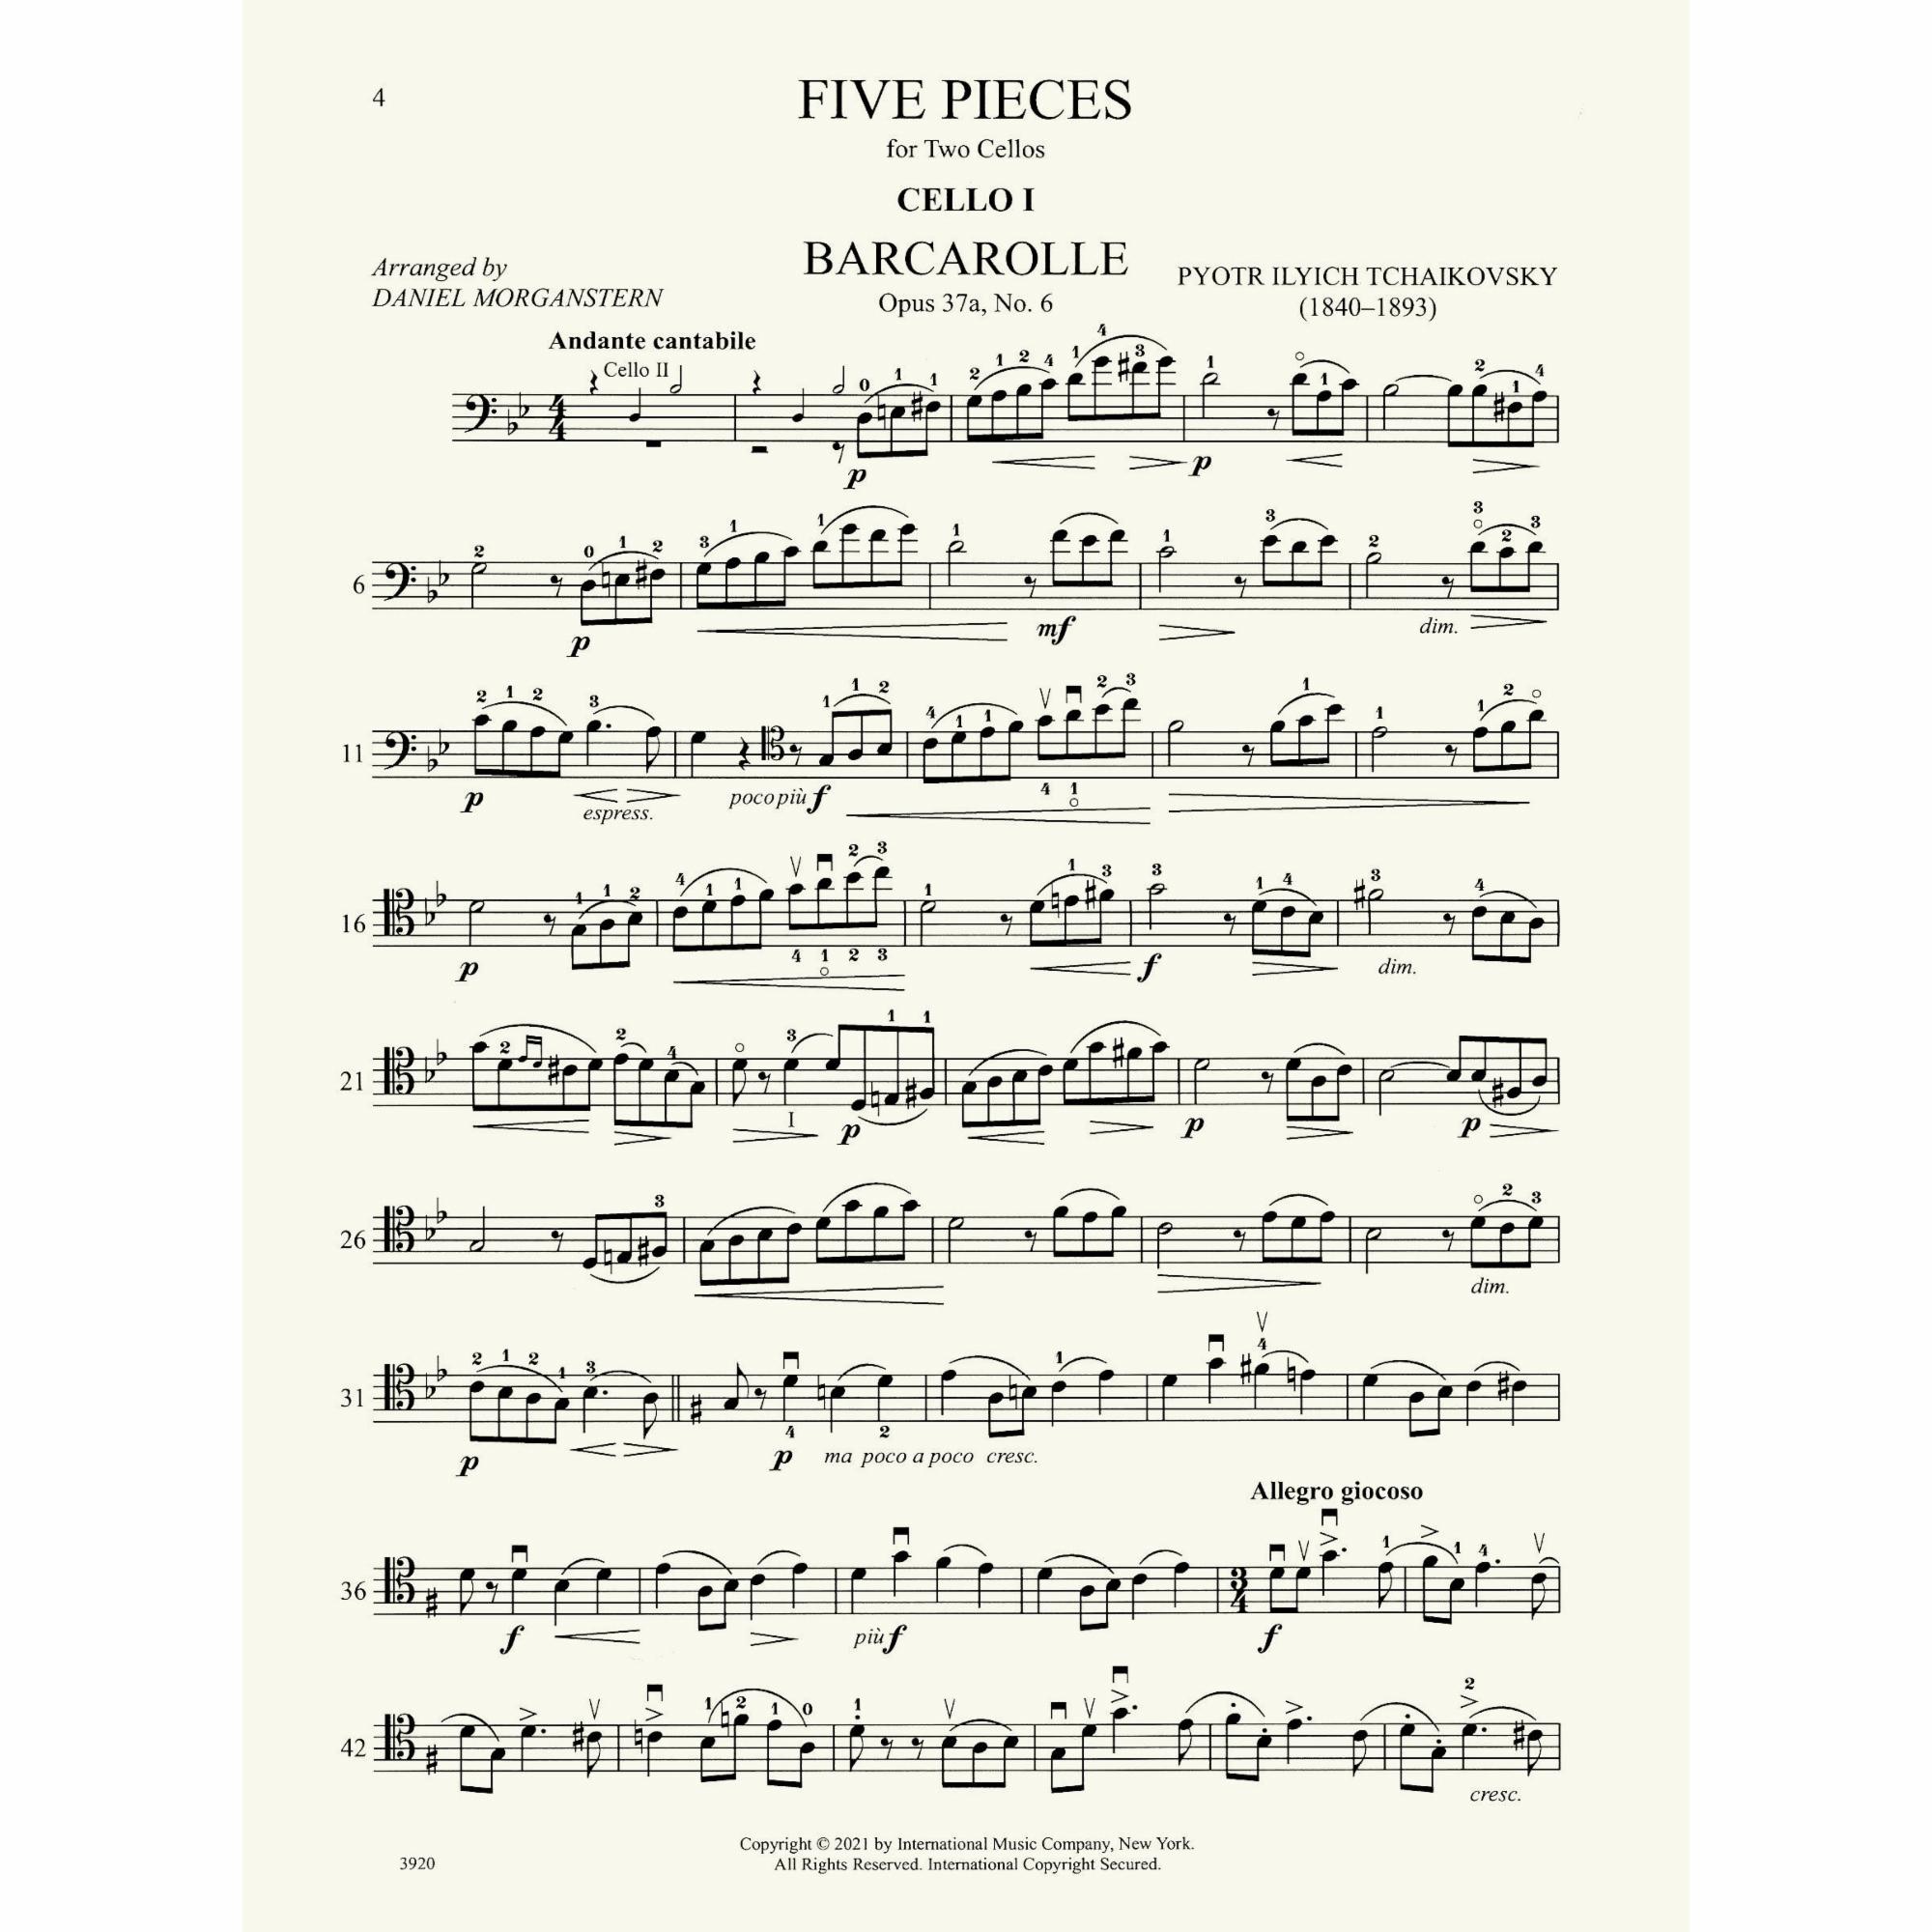 Sample: Cello I (Pg. 4)